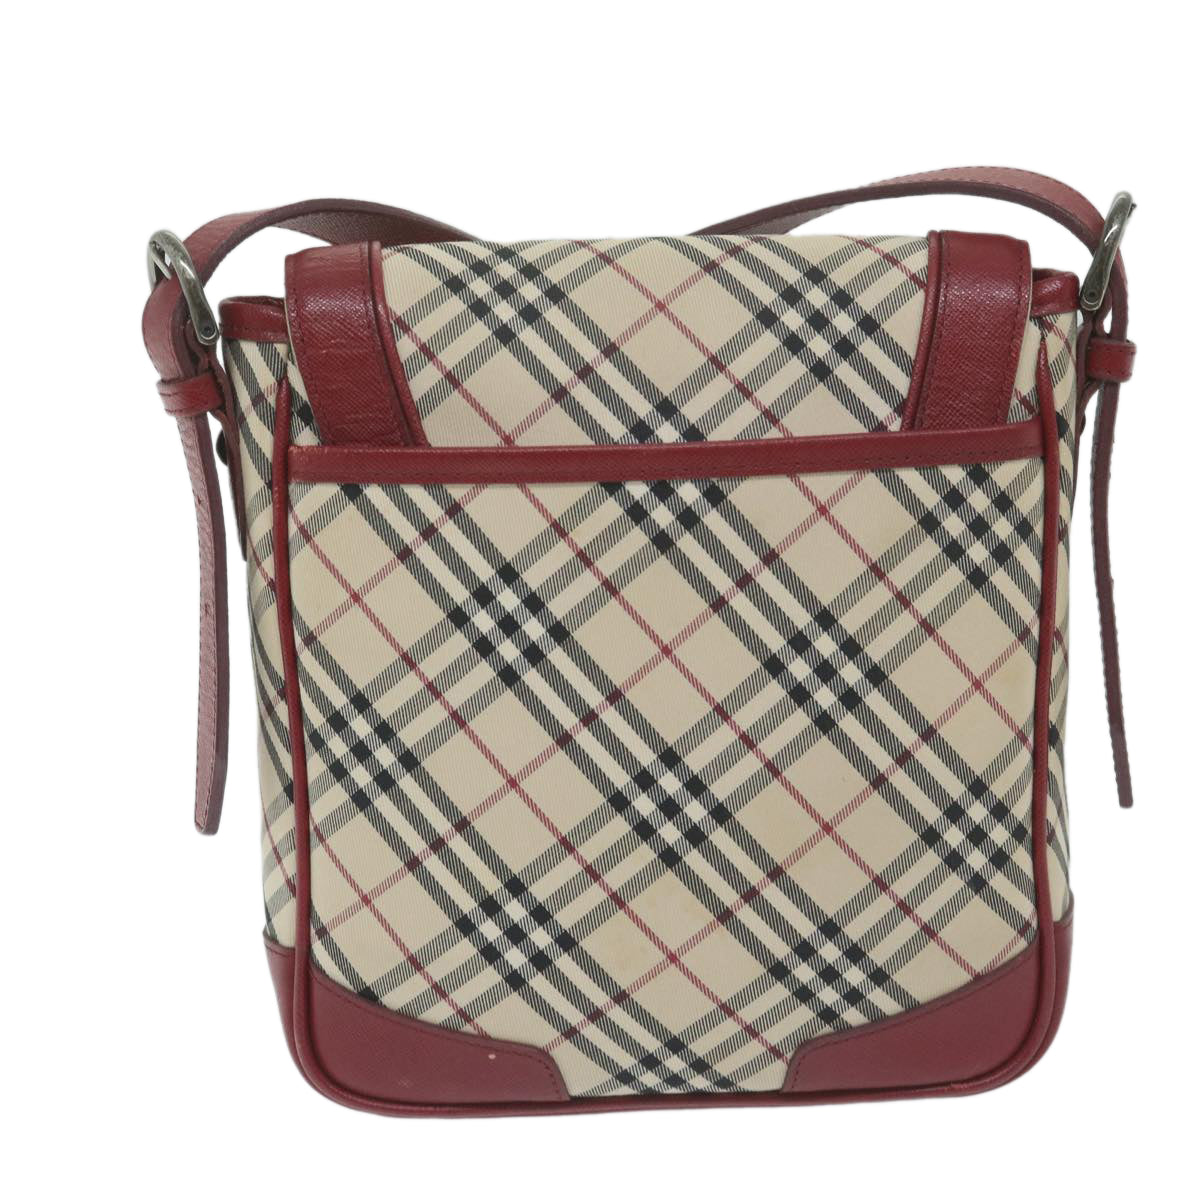 Burberrys Nova Check Shoulder Bag Nylon Canvas Beige Red Auth 63826 - 0